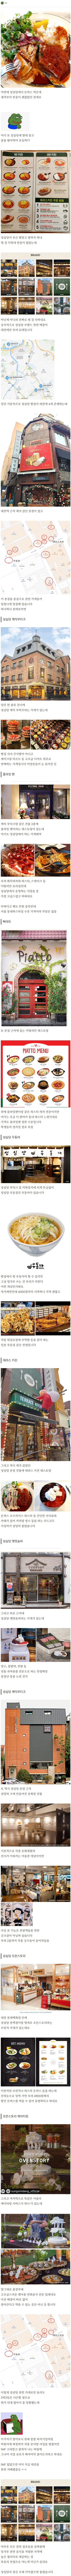 nokbeon.net-더이상 빵집 아닌(?)